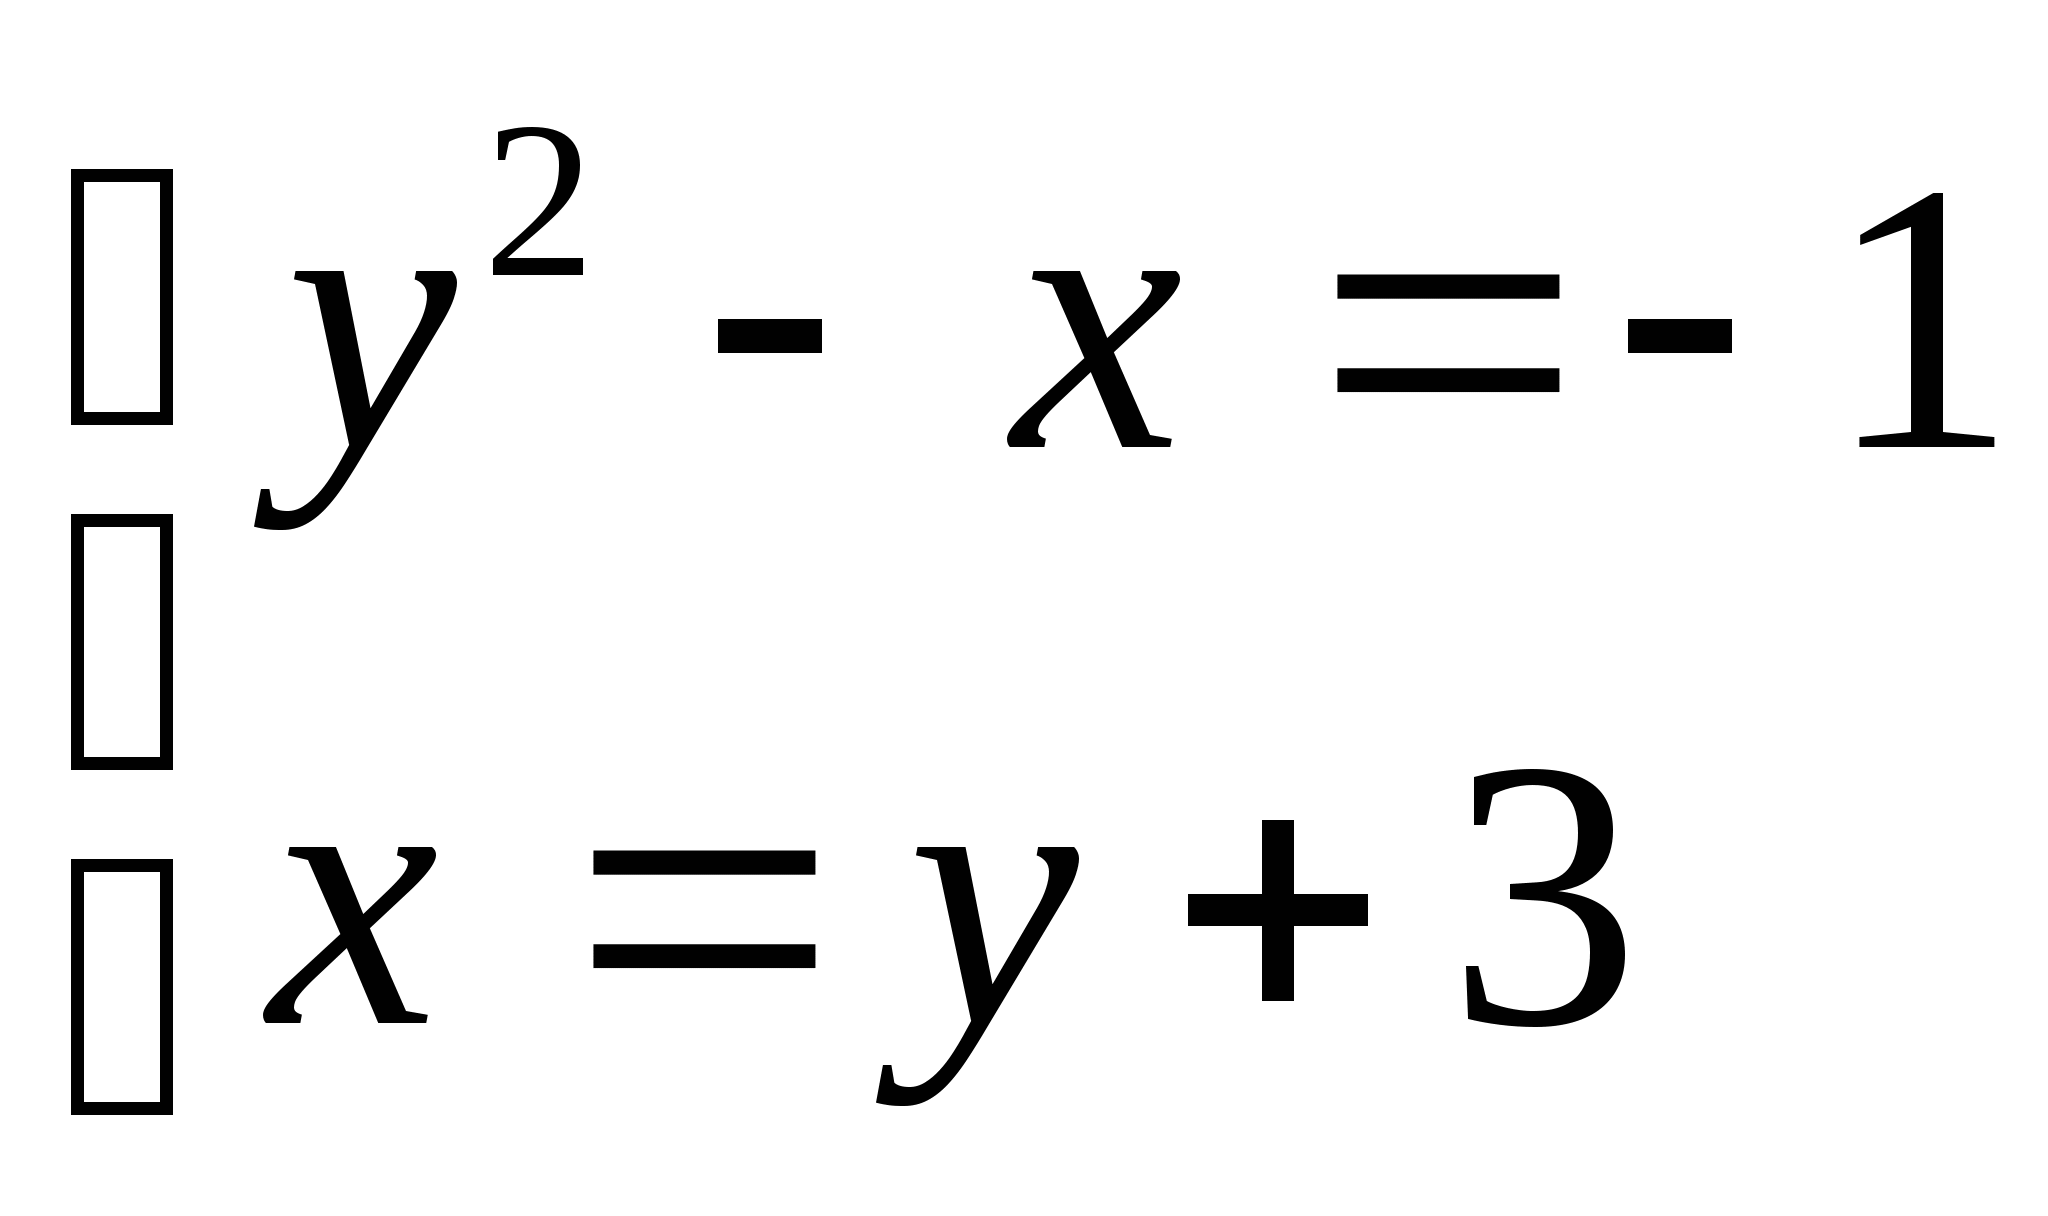 Правила по геометрии на тему Алгебра пәнінен дидактикалық материалдар